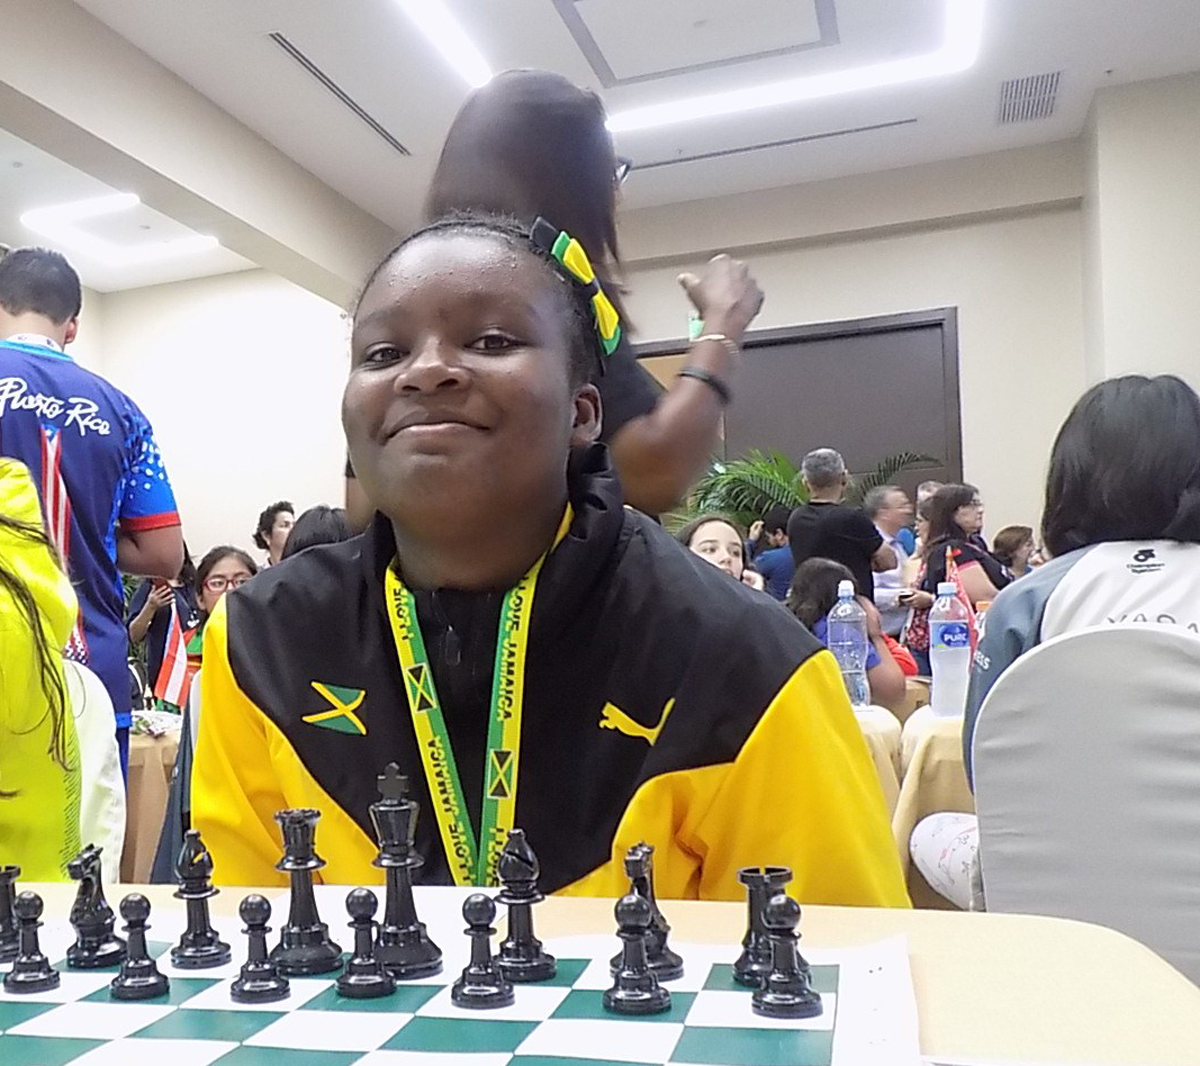 Cayman Islands Chess Federation